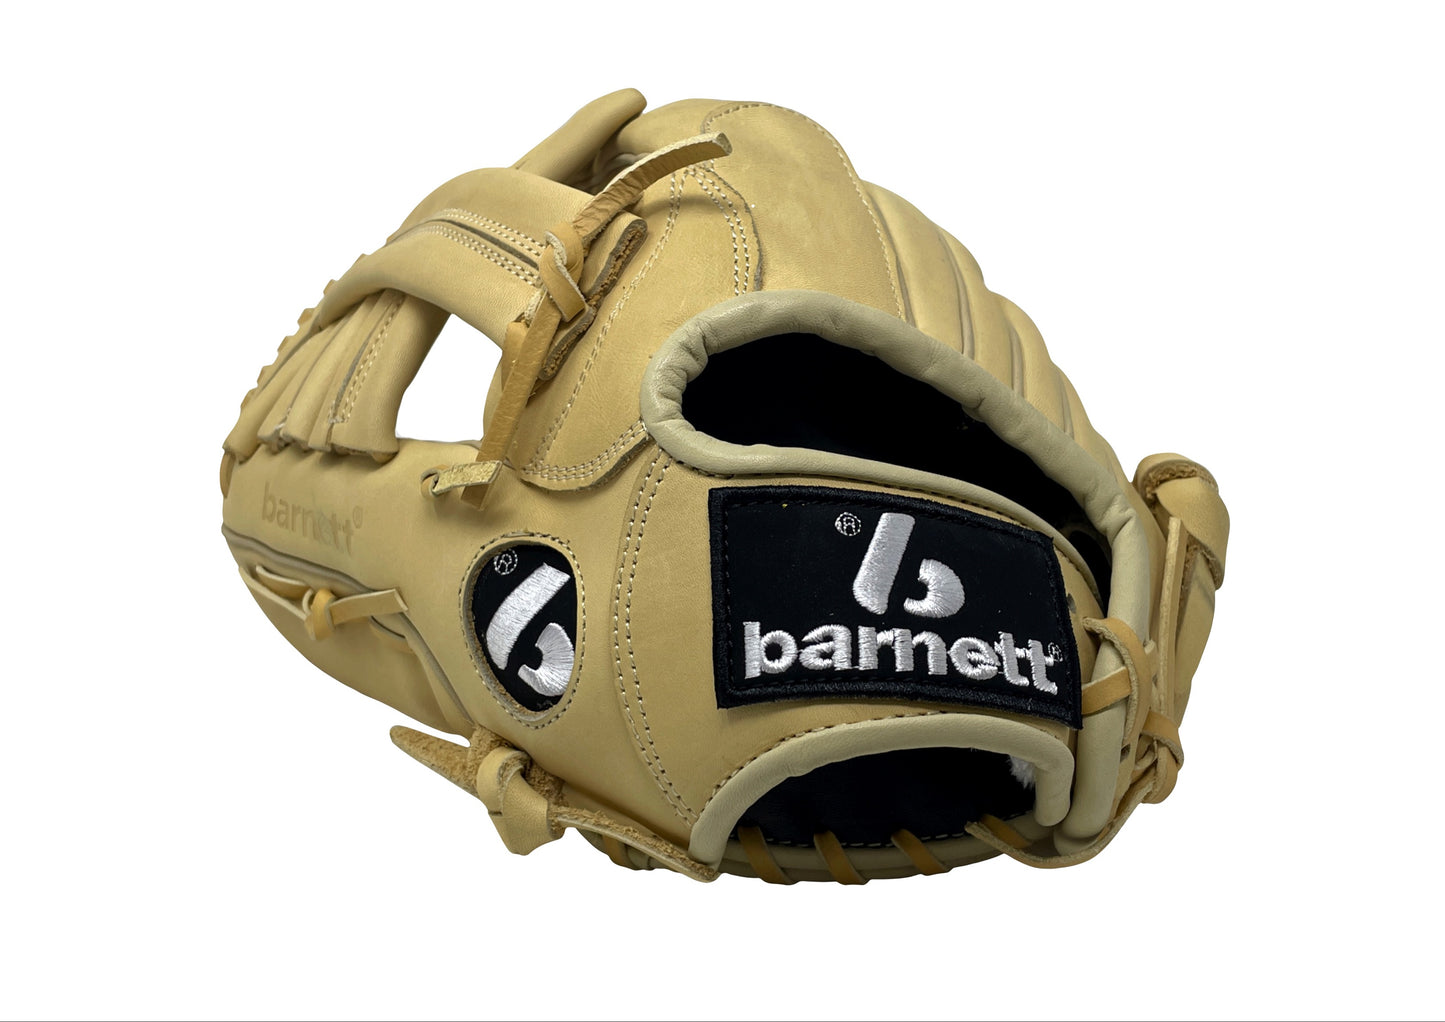 FL-130 Gant de baseball professionnel, cuir pleine fleur, champ extérieur, softball, 13'', beige